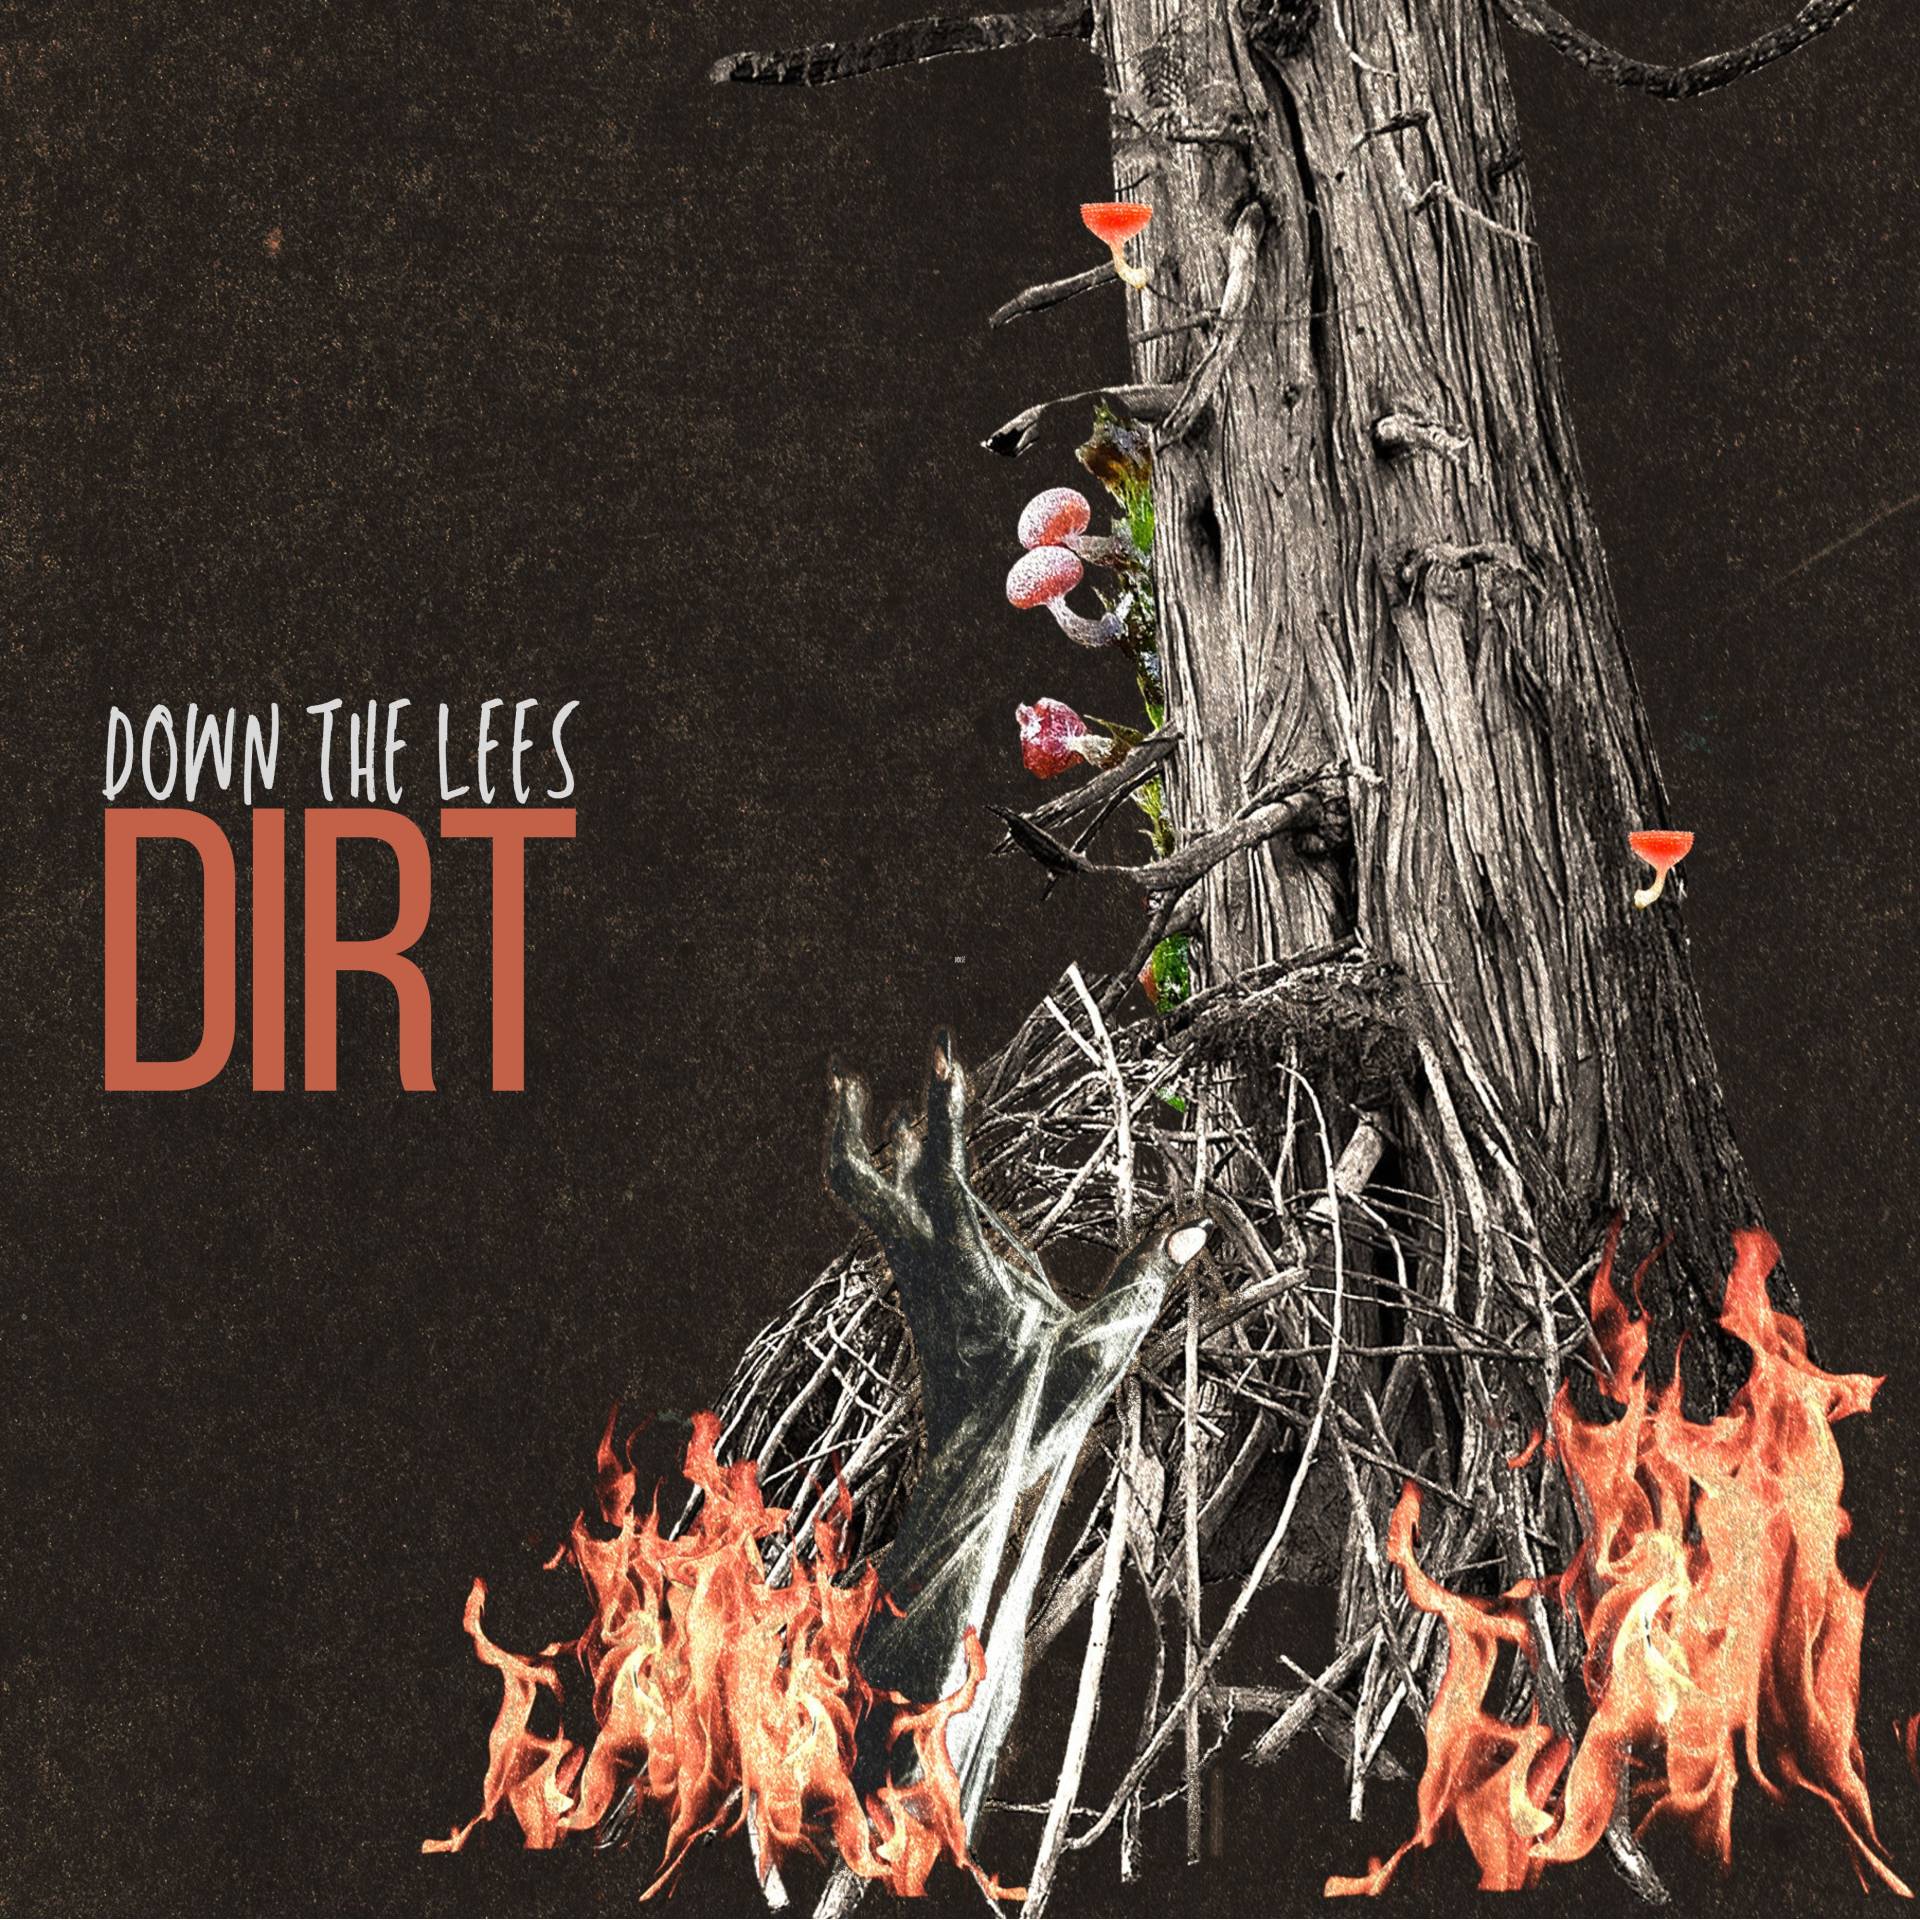 Down The Lees ‘Dirt’ photo by Mirabelle Van de Put